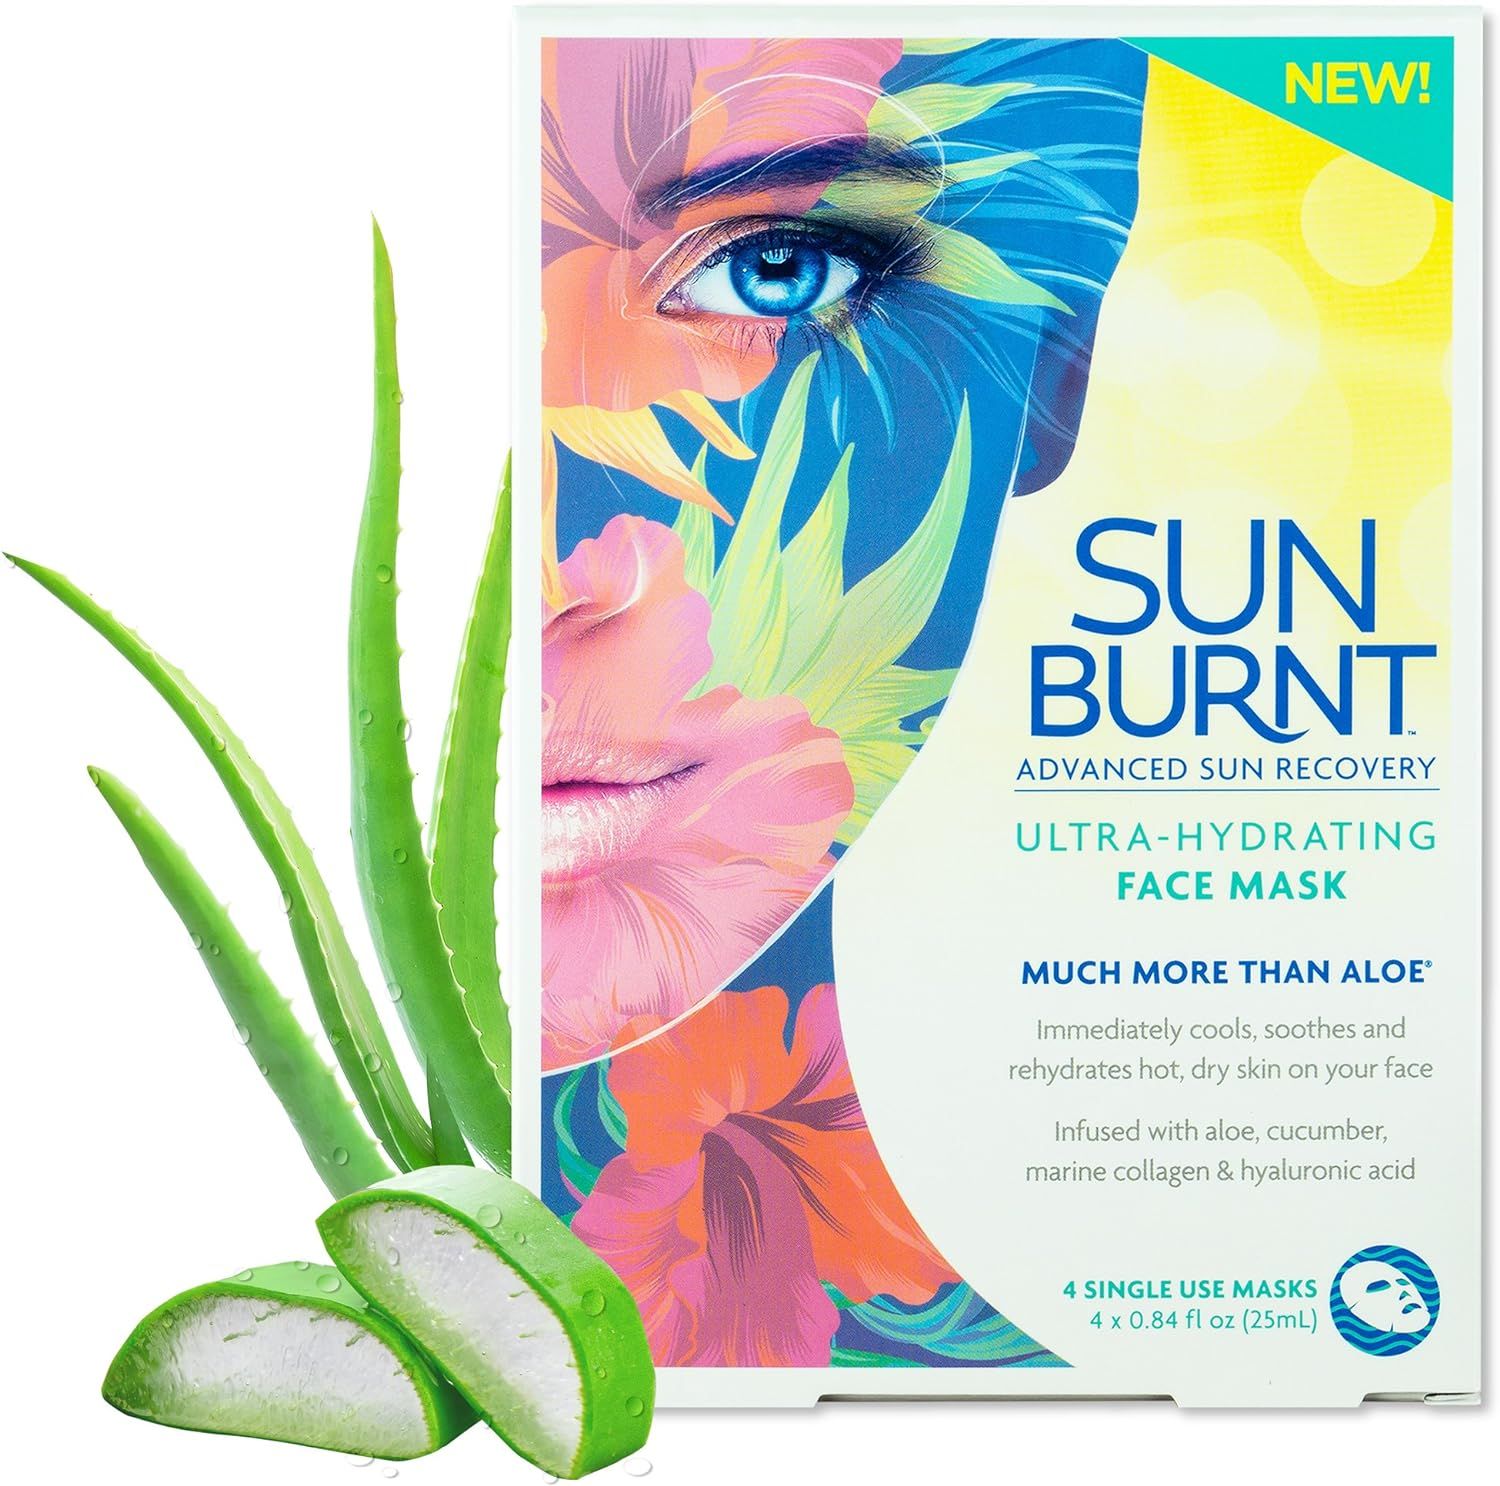 Sunburnt Ultra-Hydrating Face Sheet Mask, Advanced Sun Recovery, Treat Dry Sun Damaged Skin, For Aft | Amazon (US)